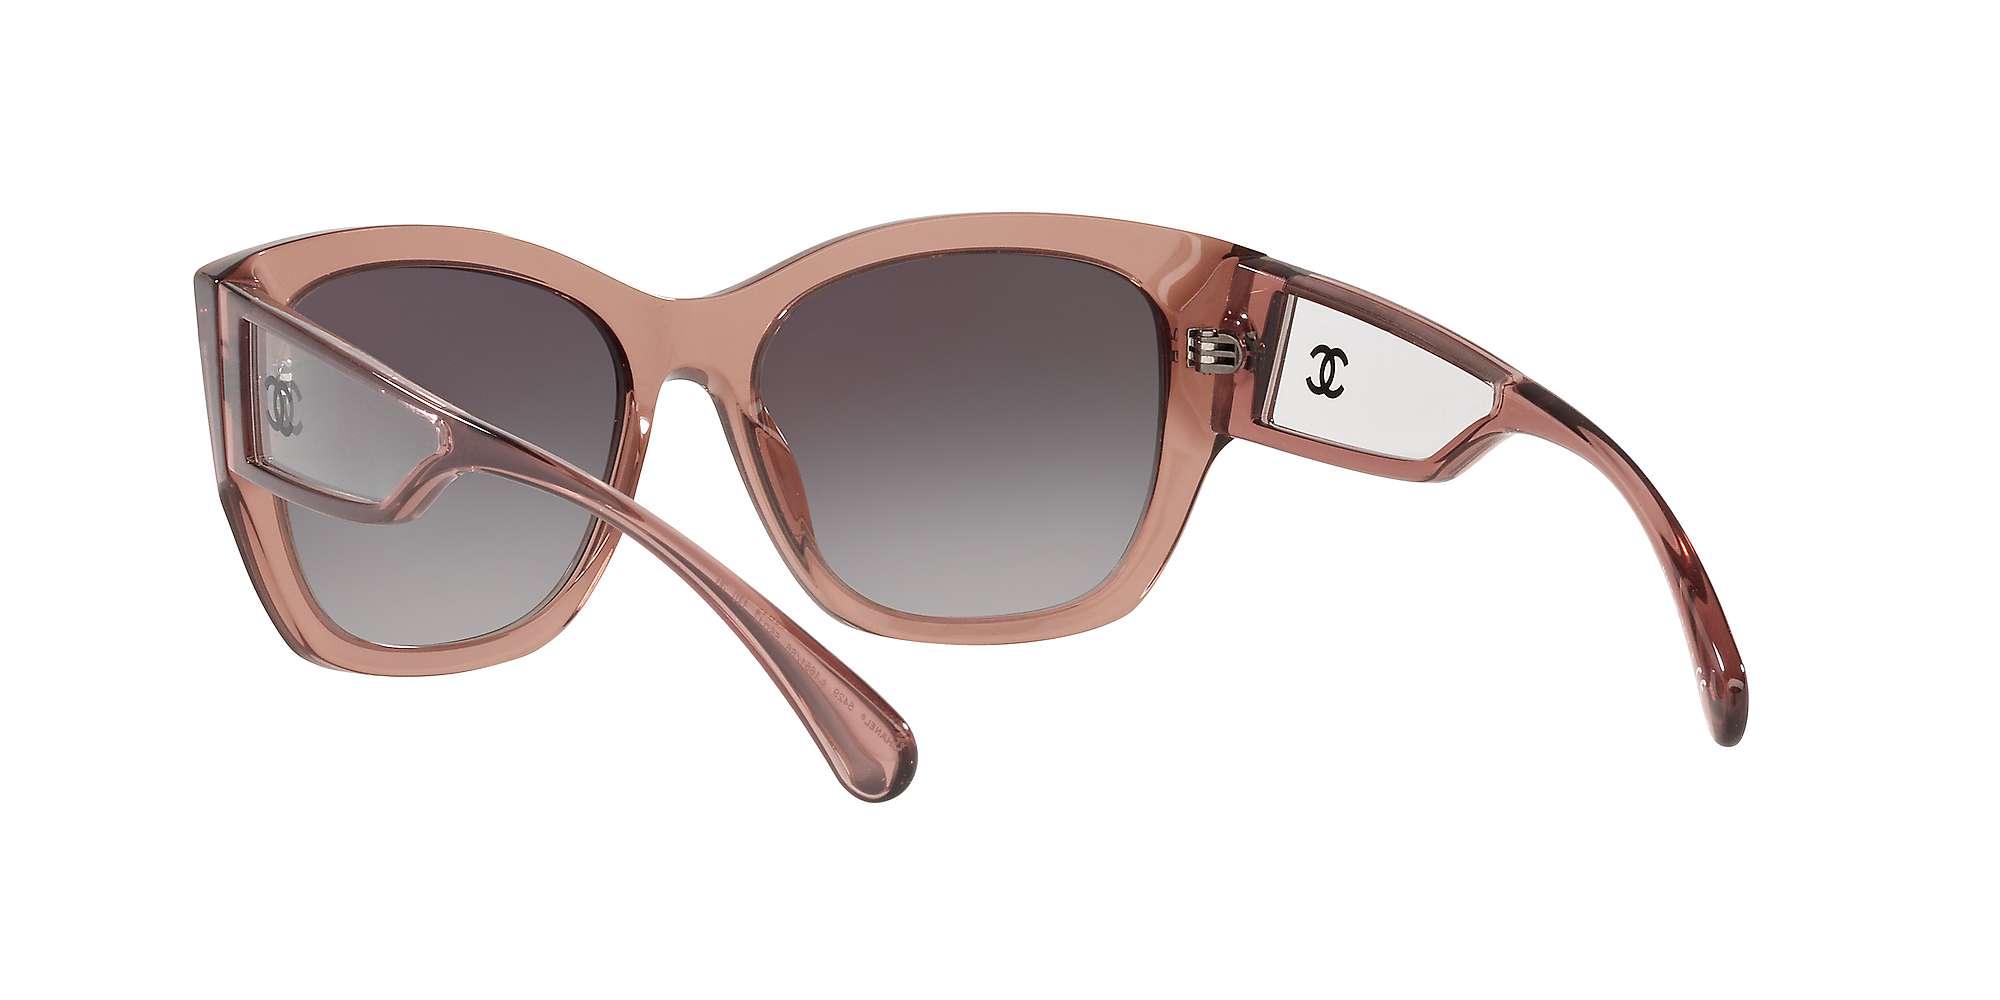 Buy CHANEL Irregular Sunglasses CH5429 Light Brown/Grey Gradient Online at johnlewis.com